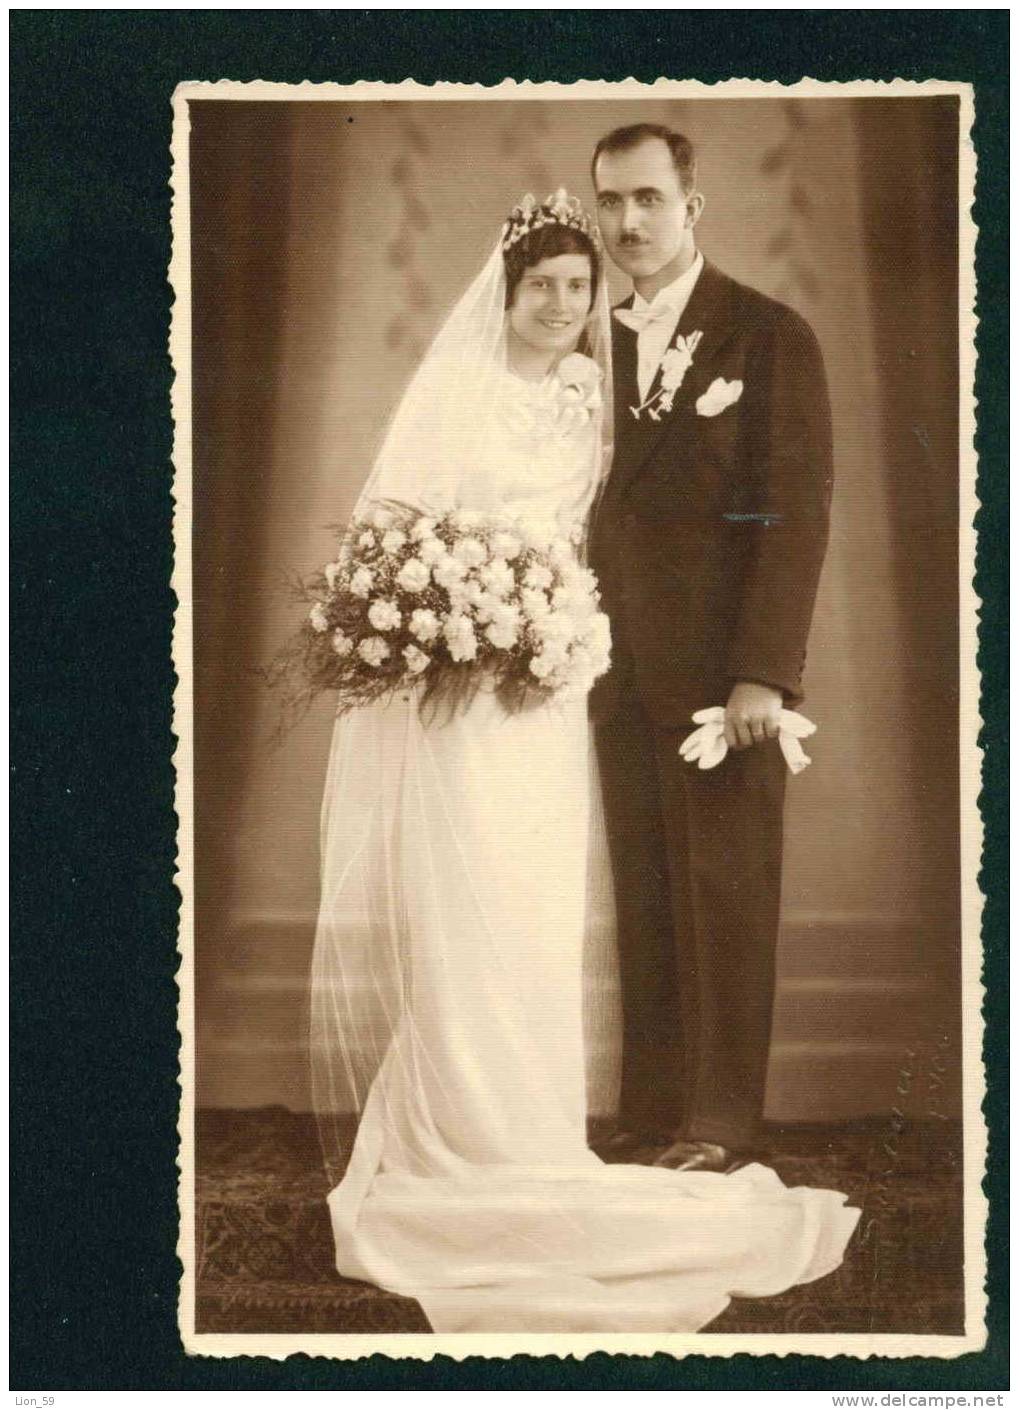 D3070 / Marriages  WEDDING , BRIDE W BRIDEGROOM Bulgaria 1930s Vintage REAL Photo PHOTOGRAPHER "SALASH" - ROUSSE - Hochzeiten